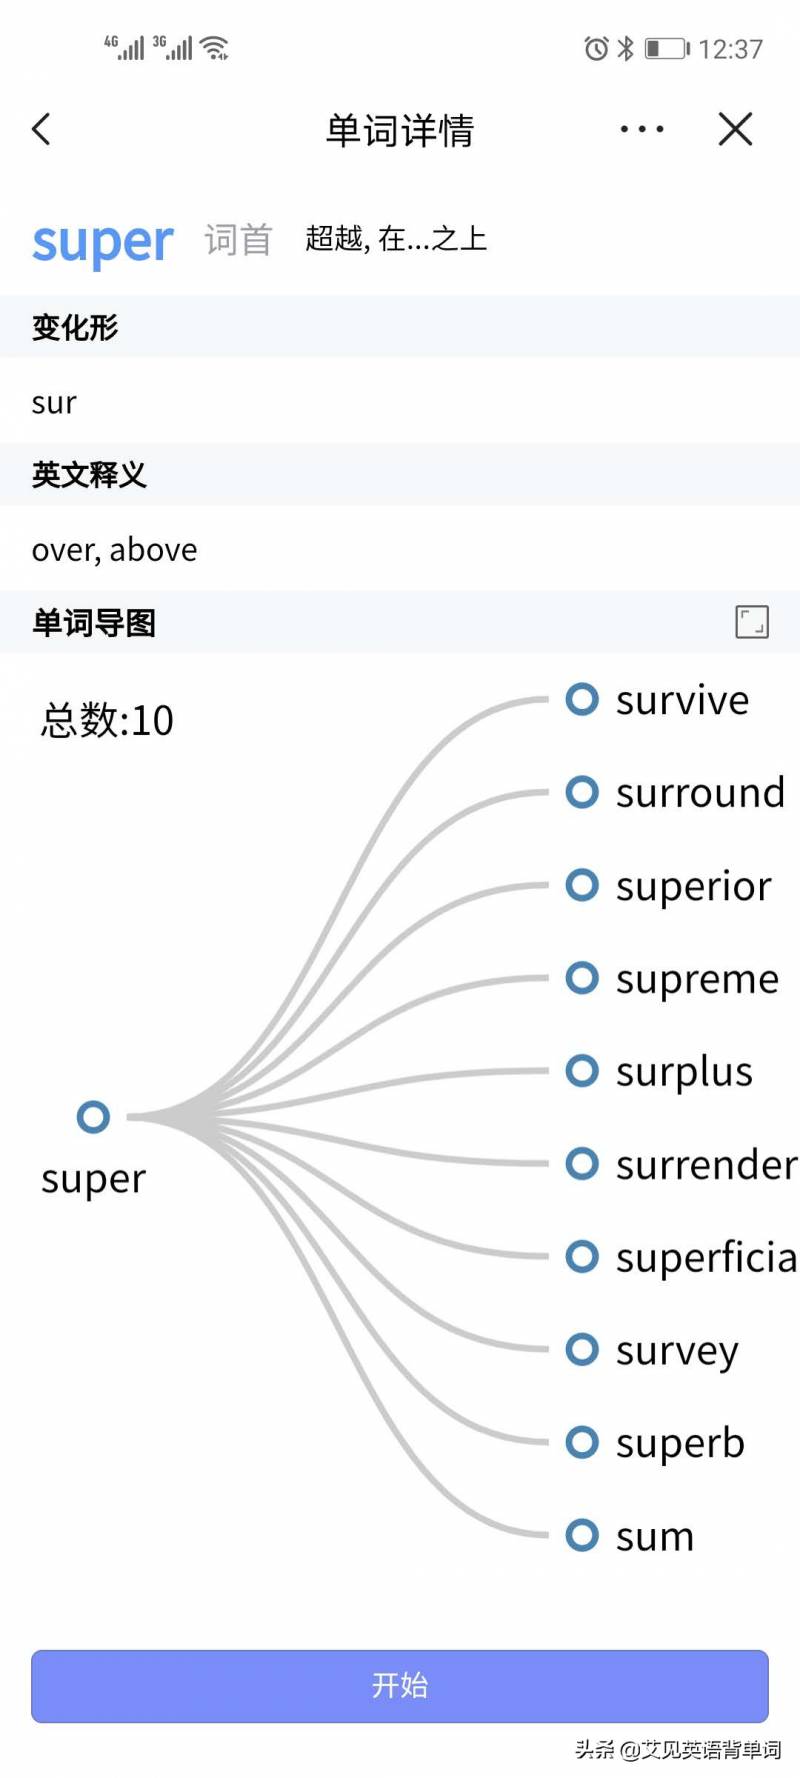 supreme是什么意思中文叫什么？